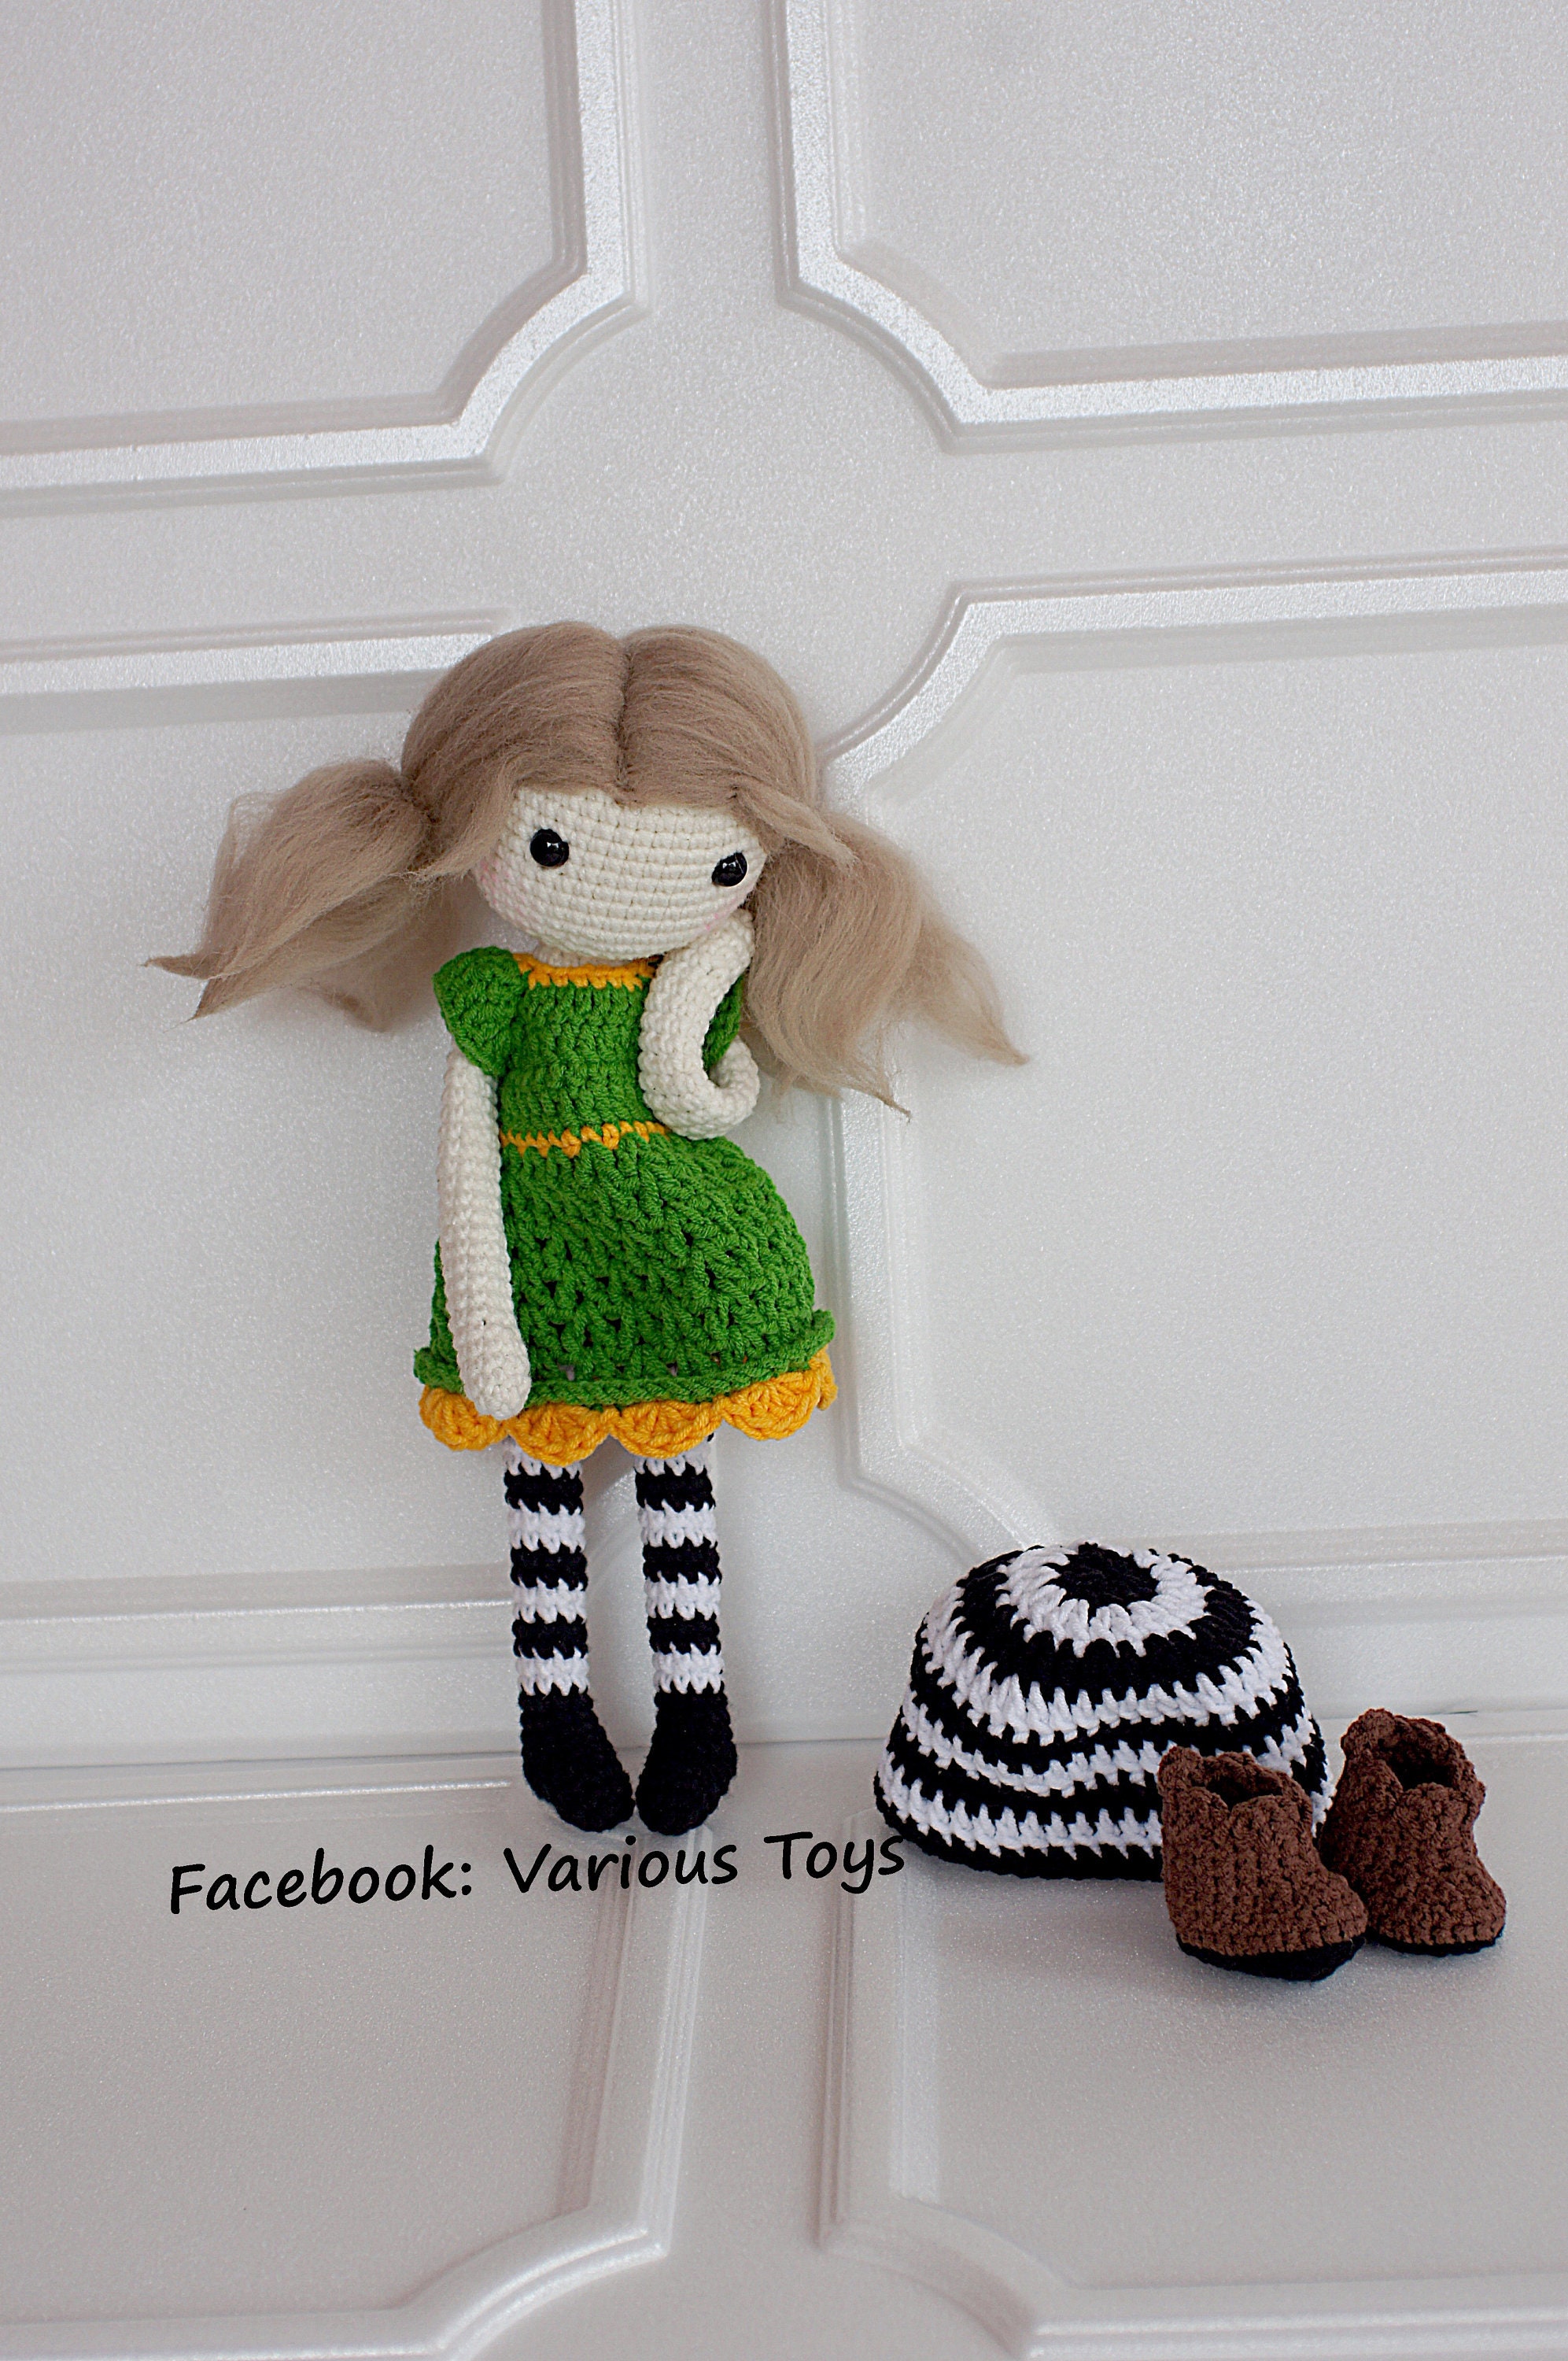 etsy knitted dolls